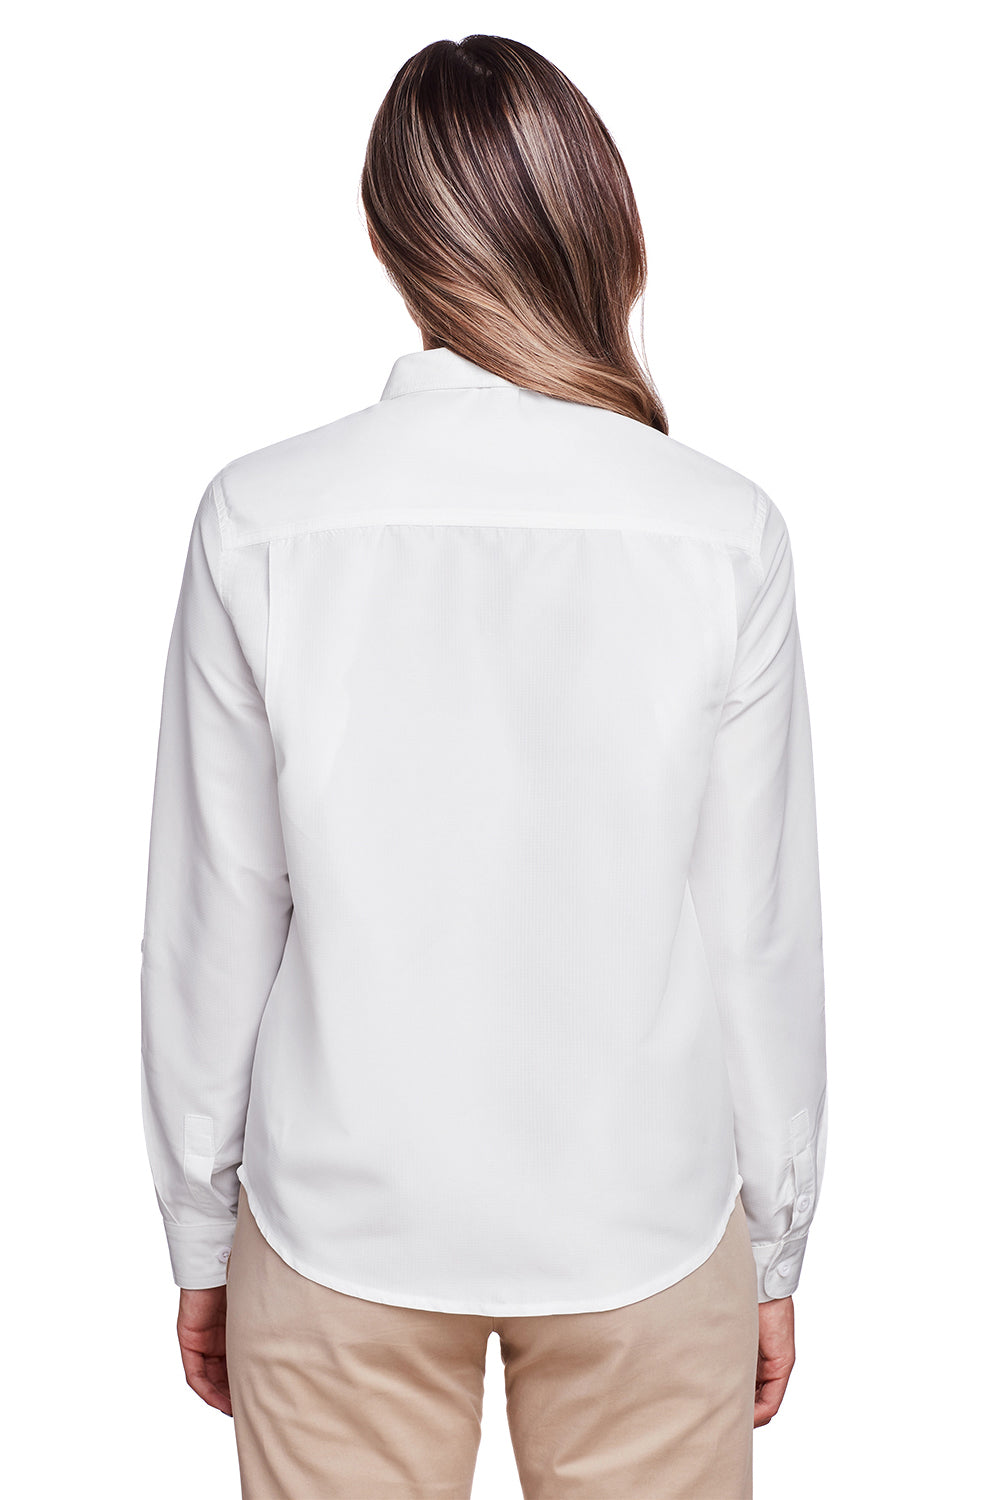 Harriton M580LW Womens Key West Performance Moisture Wicking Long Sleeve Button Down Shirt White Back